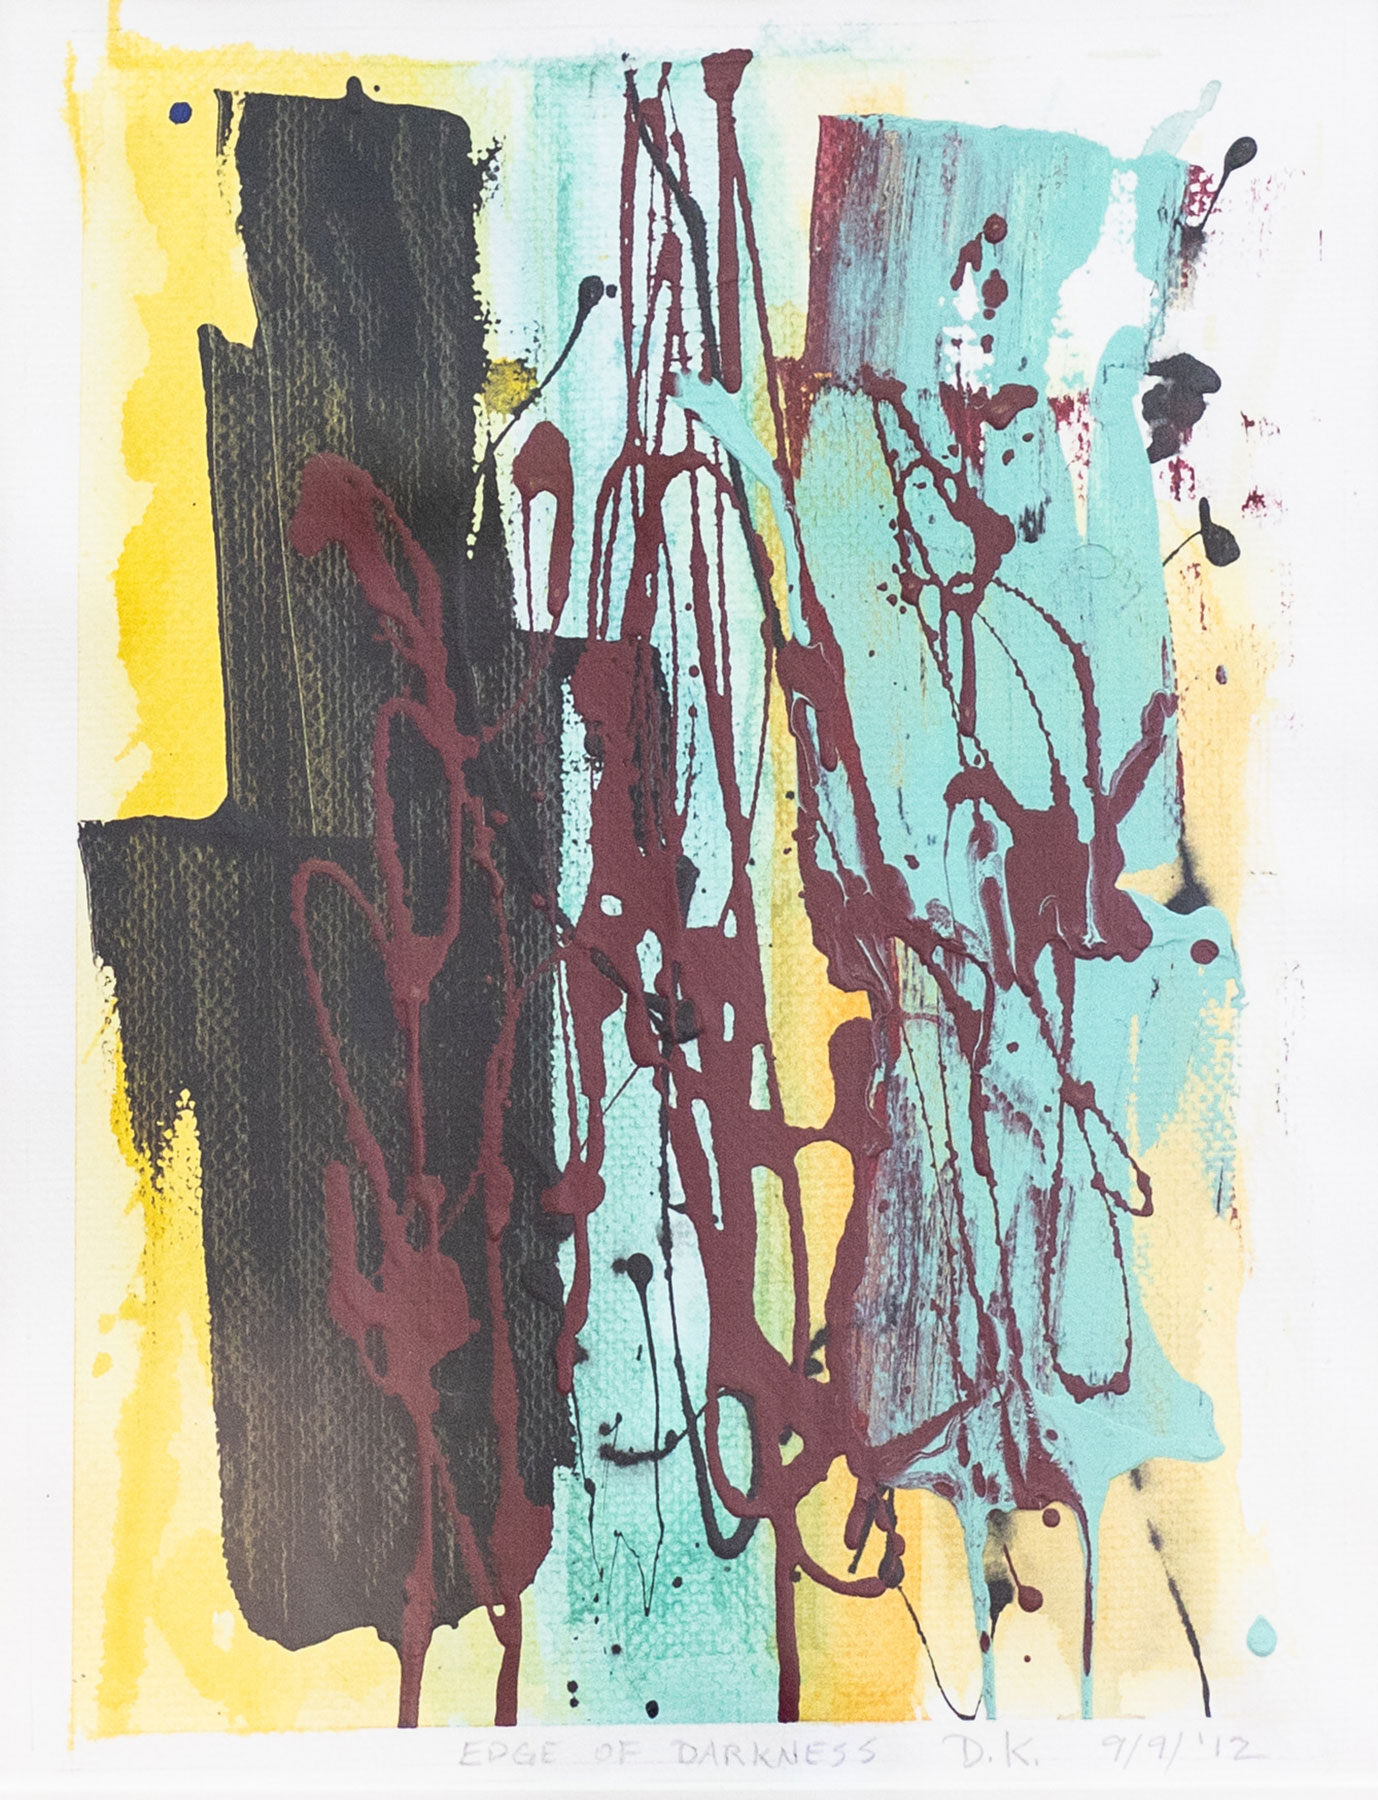 Kinnett, Doug. Edge of Darkness. Watercolor & acrylic on paper. 2012.